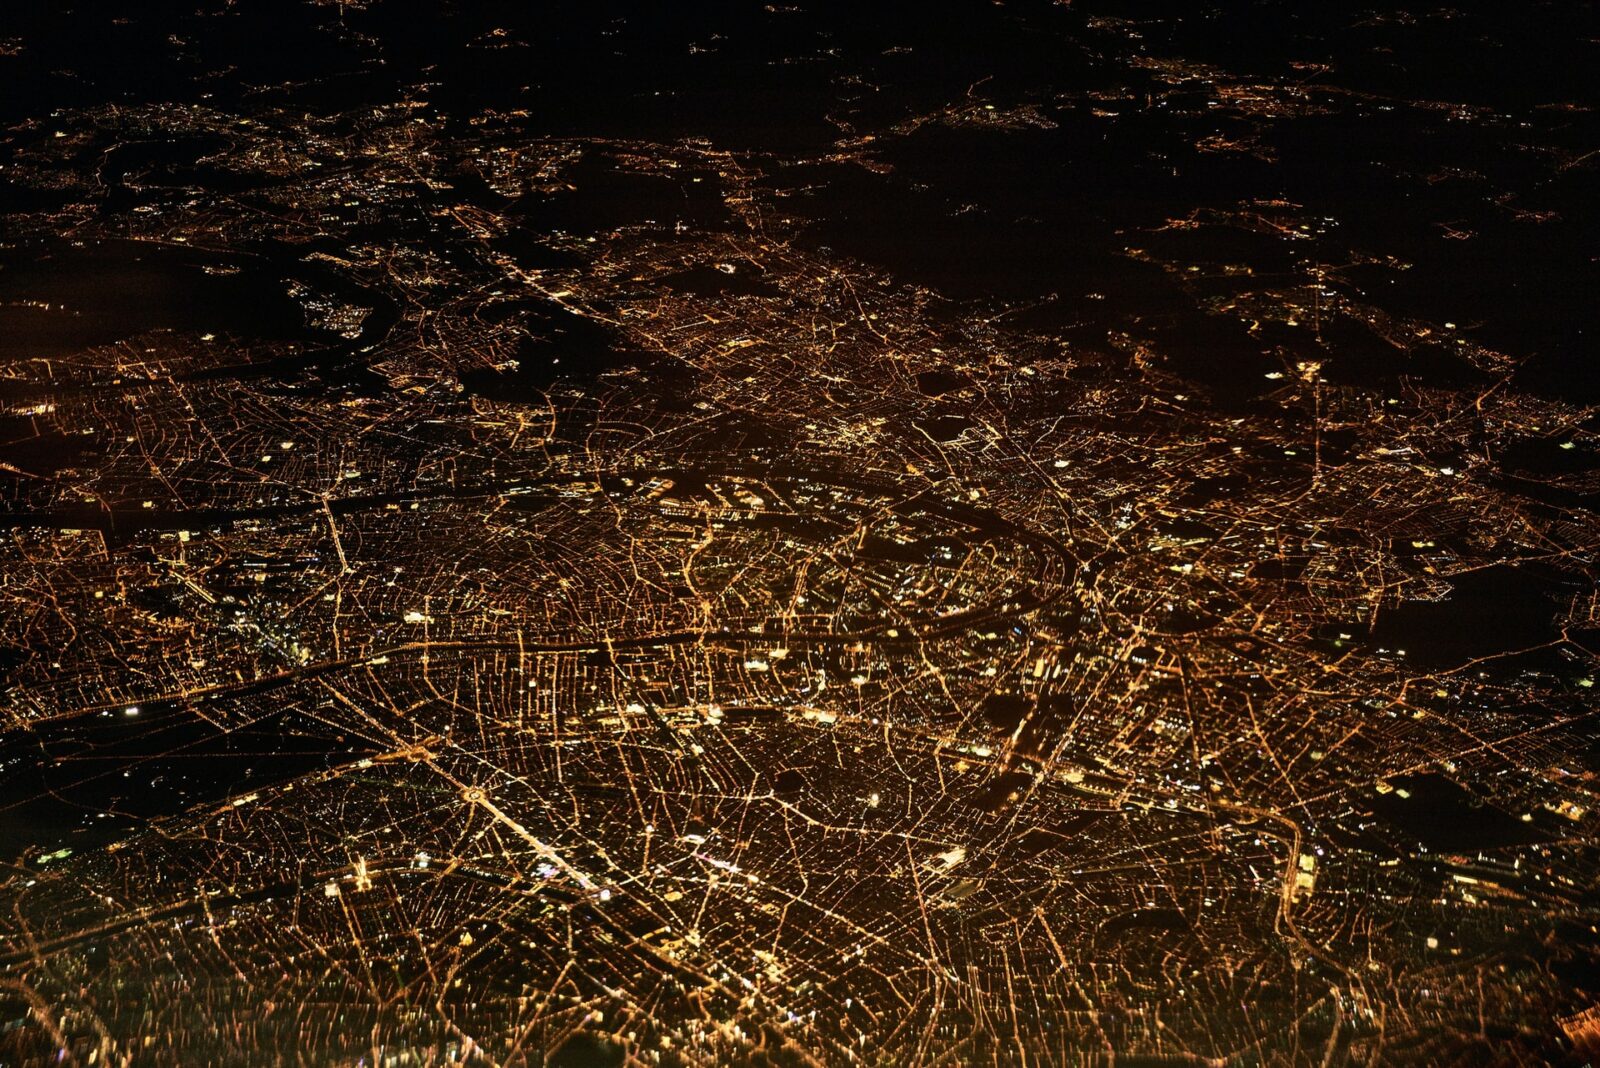 birds eye view of city at night